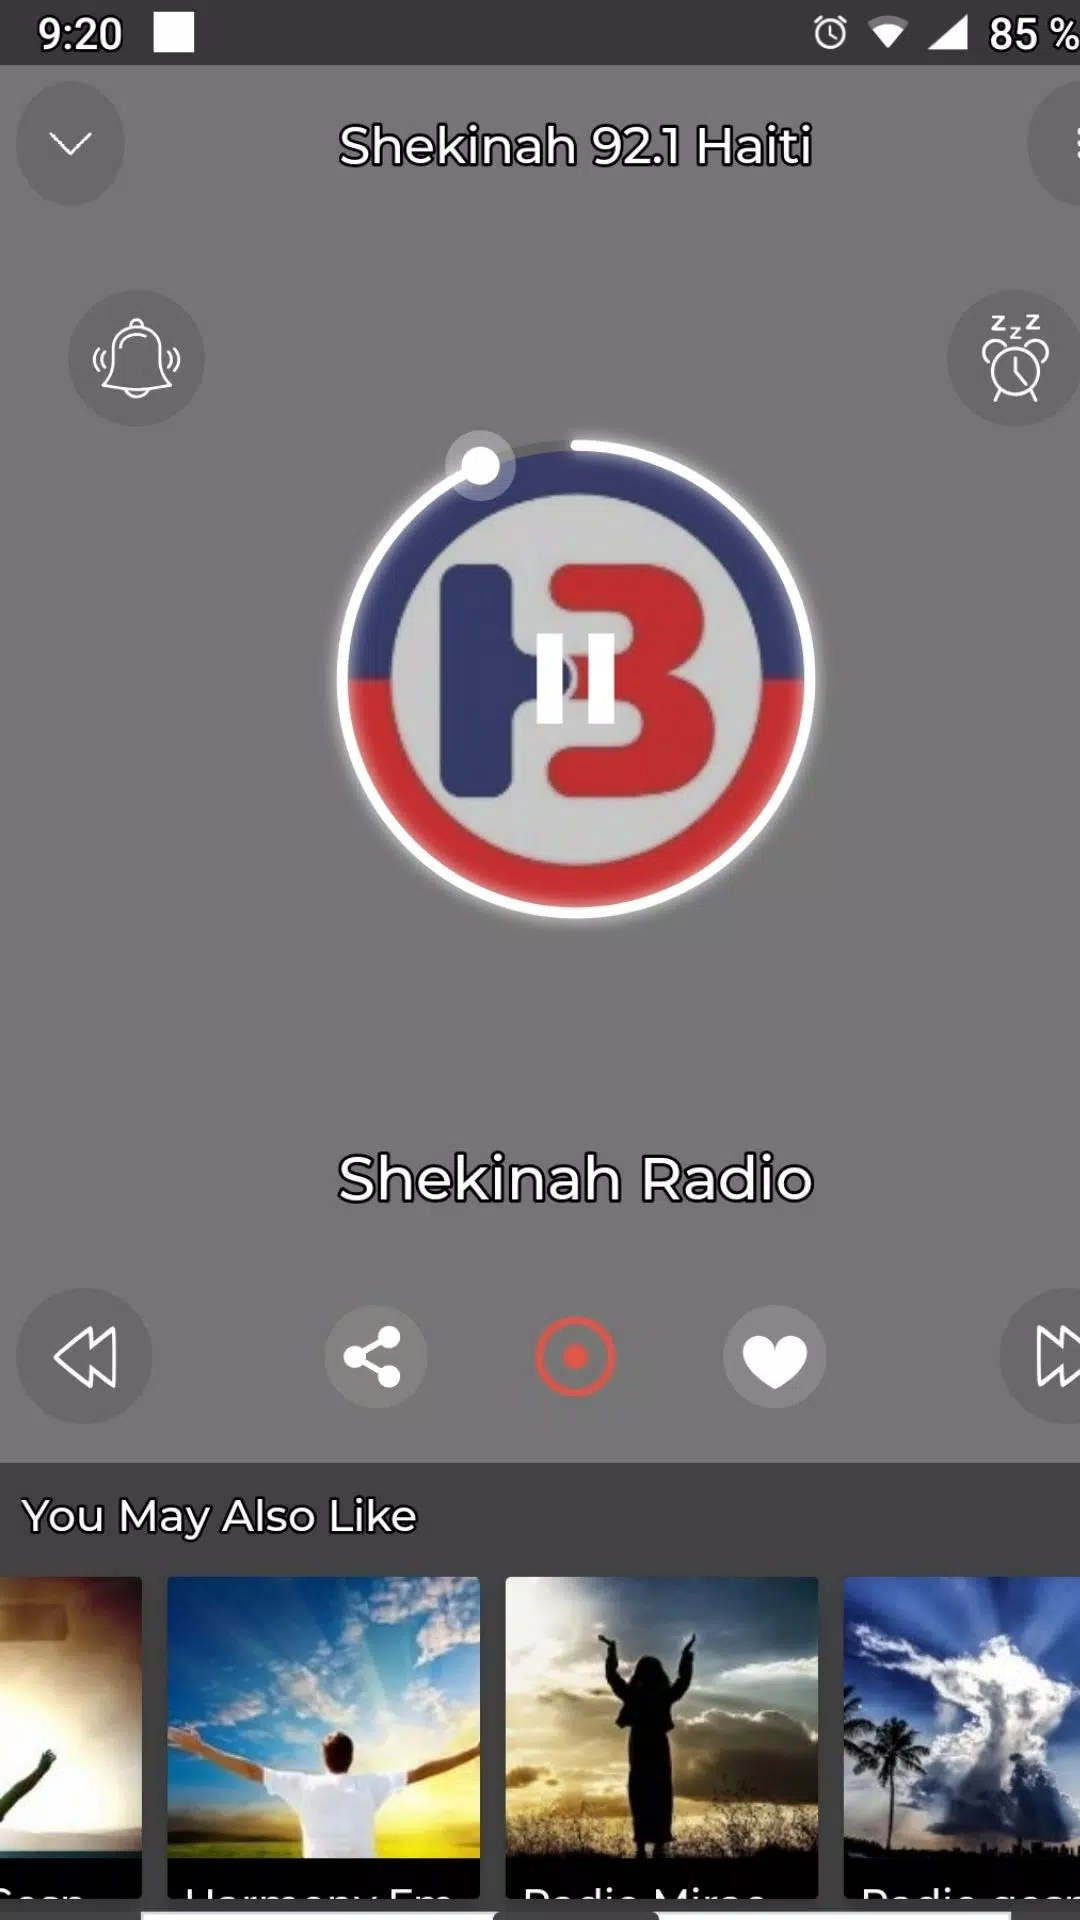 Radio Shekinah 92.1 Haiti app APK for Android Download